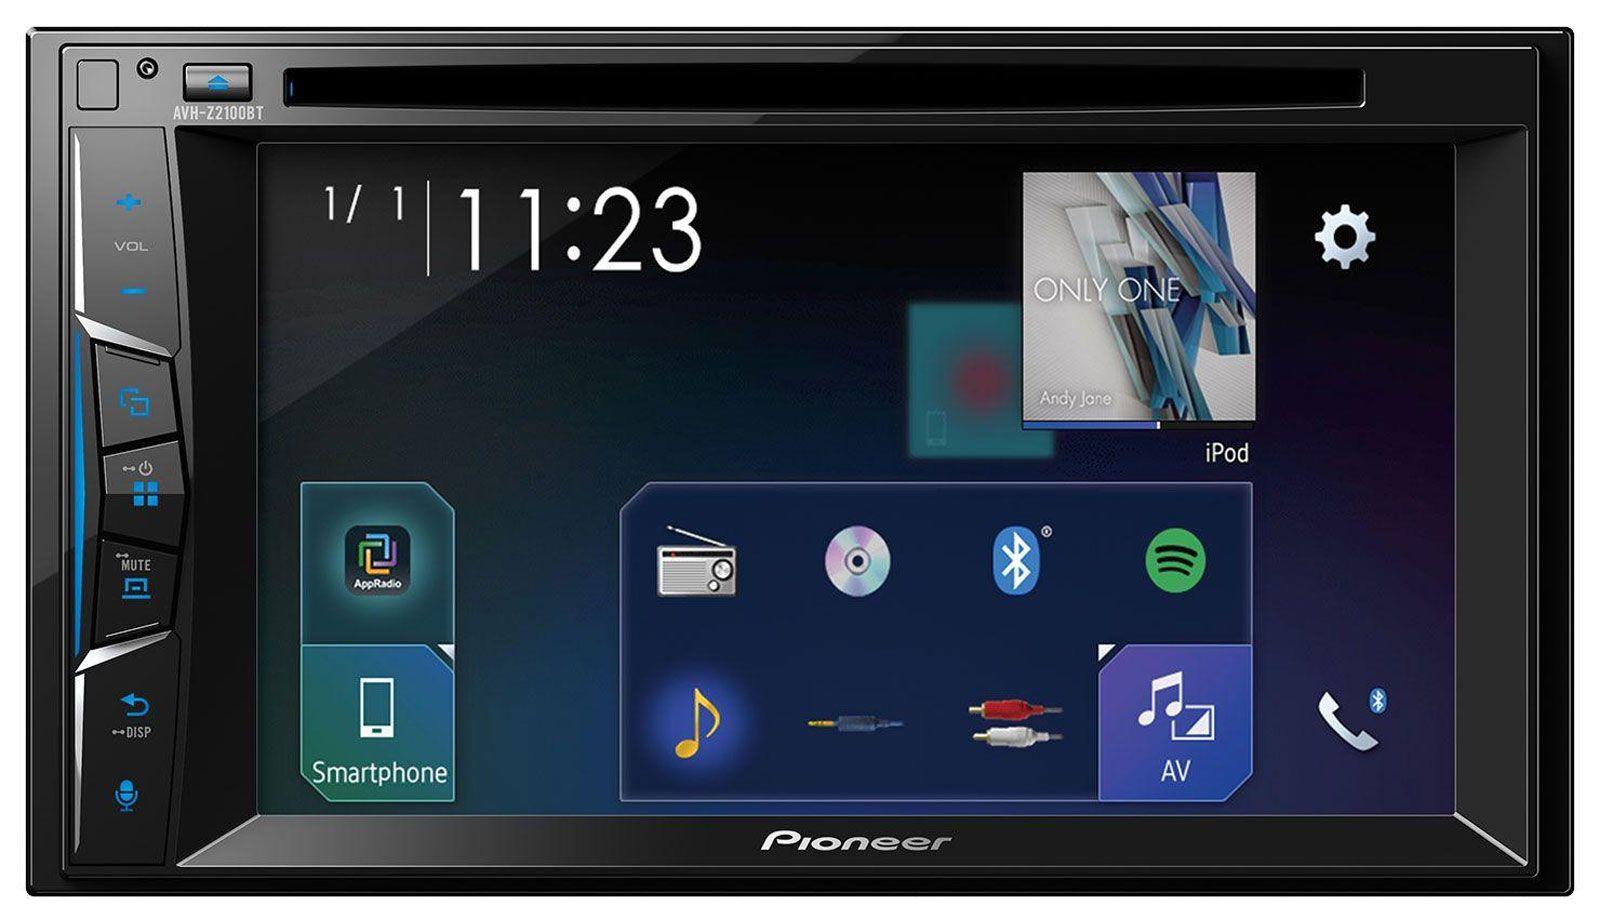 Pioneer AVH-Z2100BT - Doppel-DIN CD/DVD/MP3-Autoradio mit Touchscreen / Bluetooth / USB / iPod / AUX